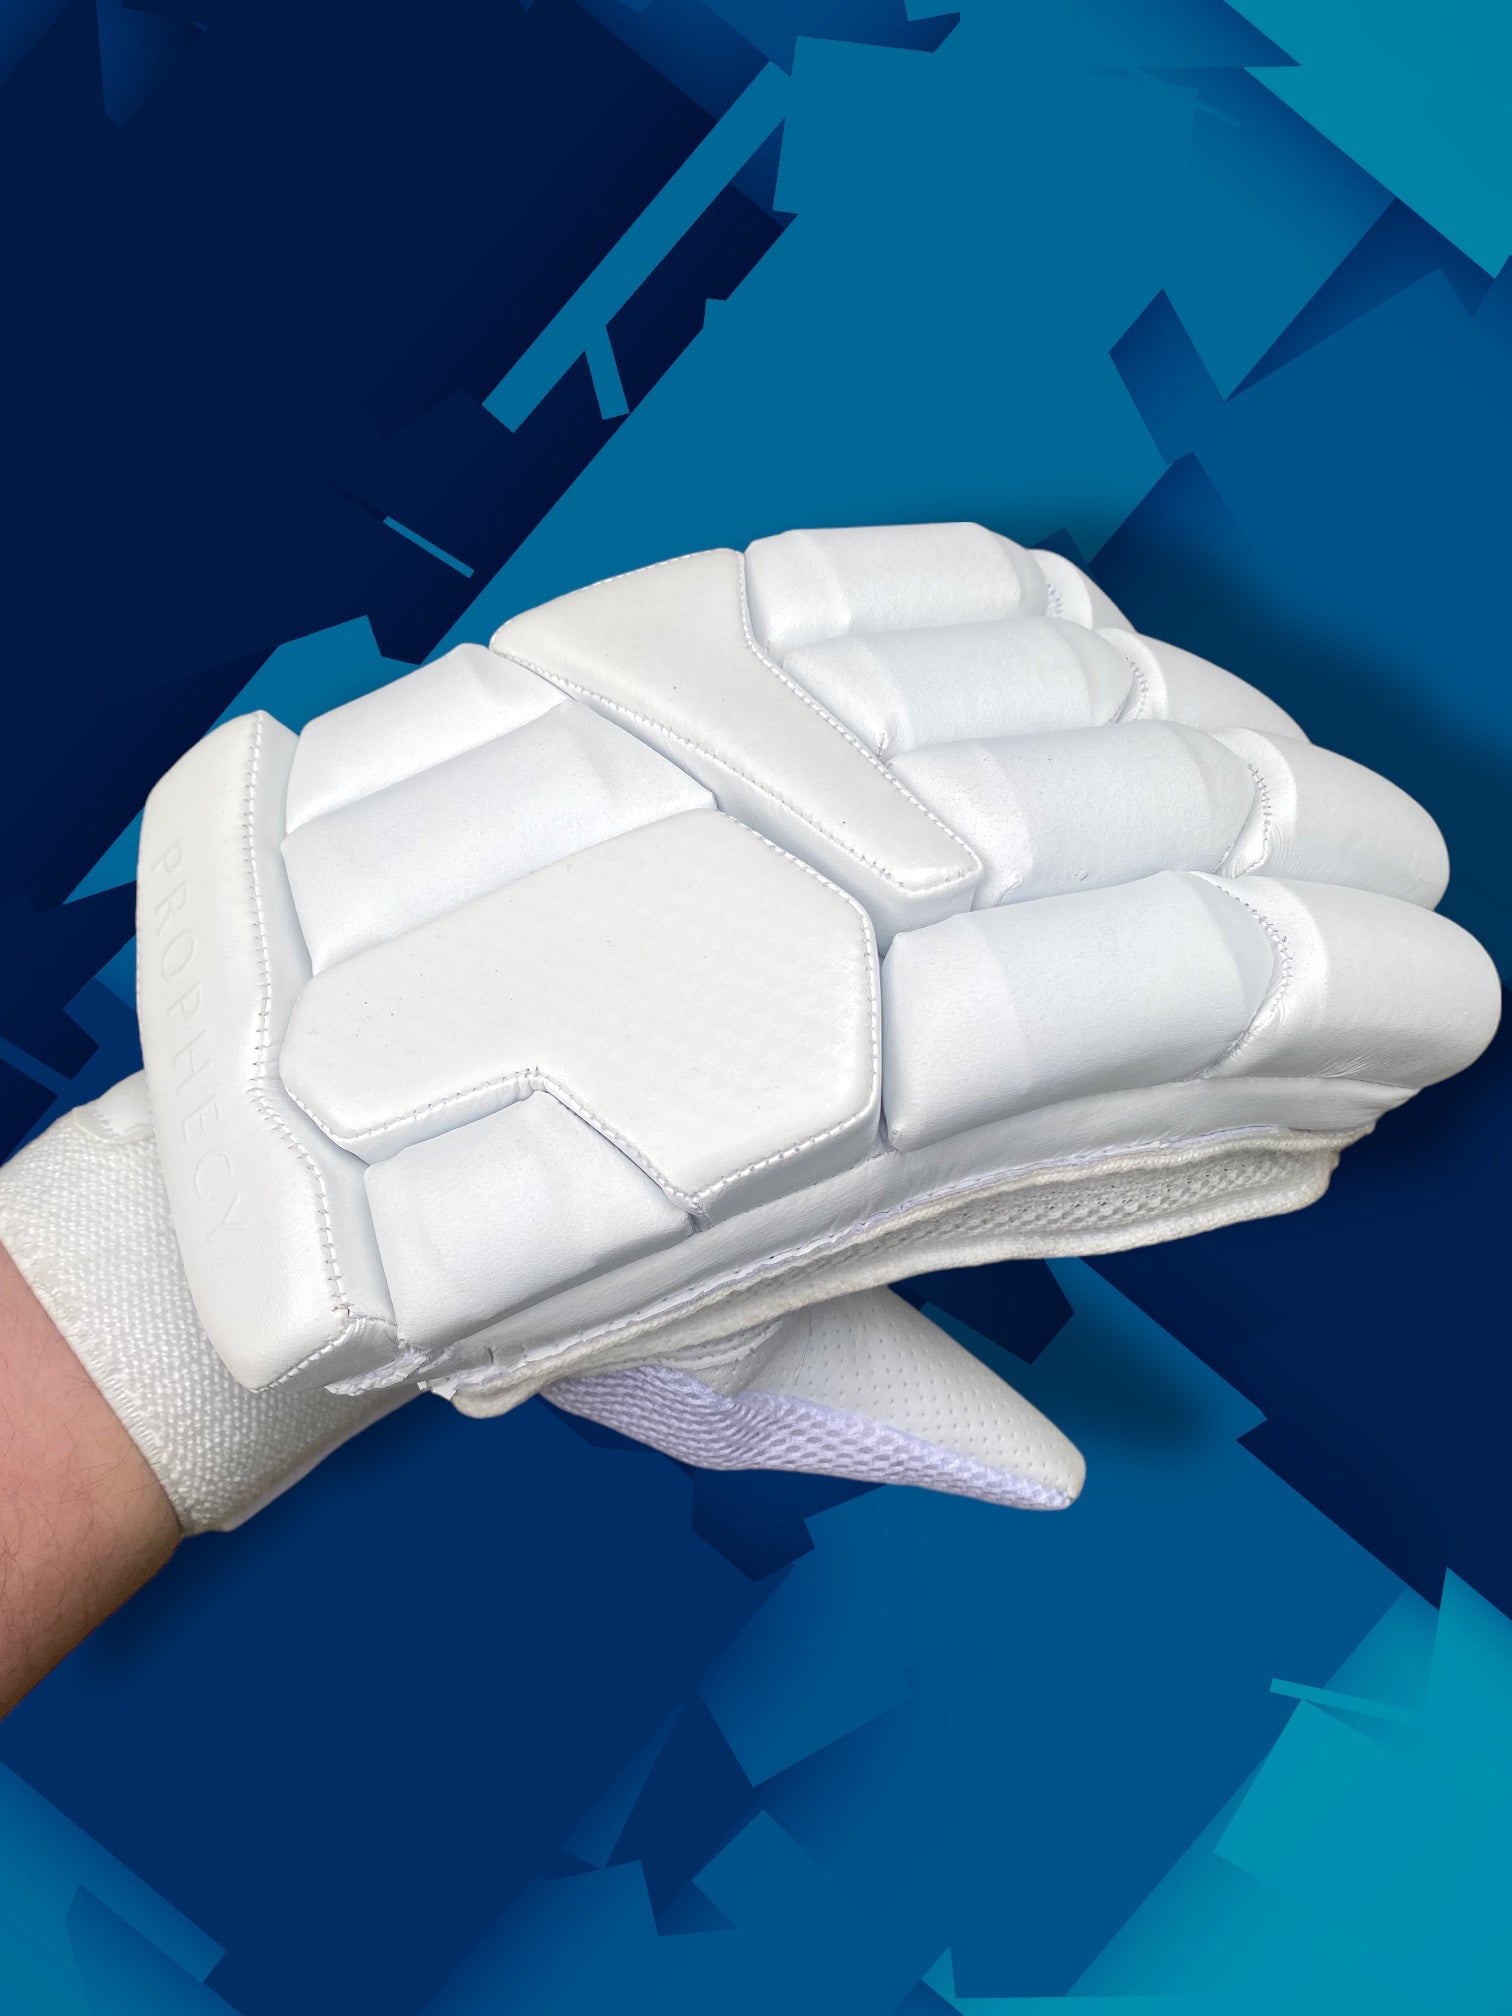 Prophecy Cricket Batting Gloves